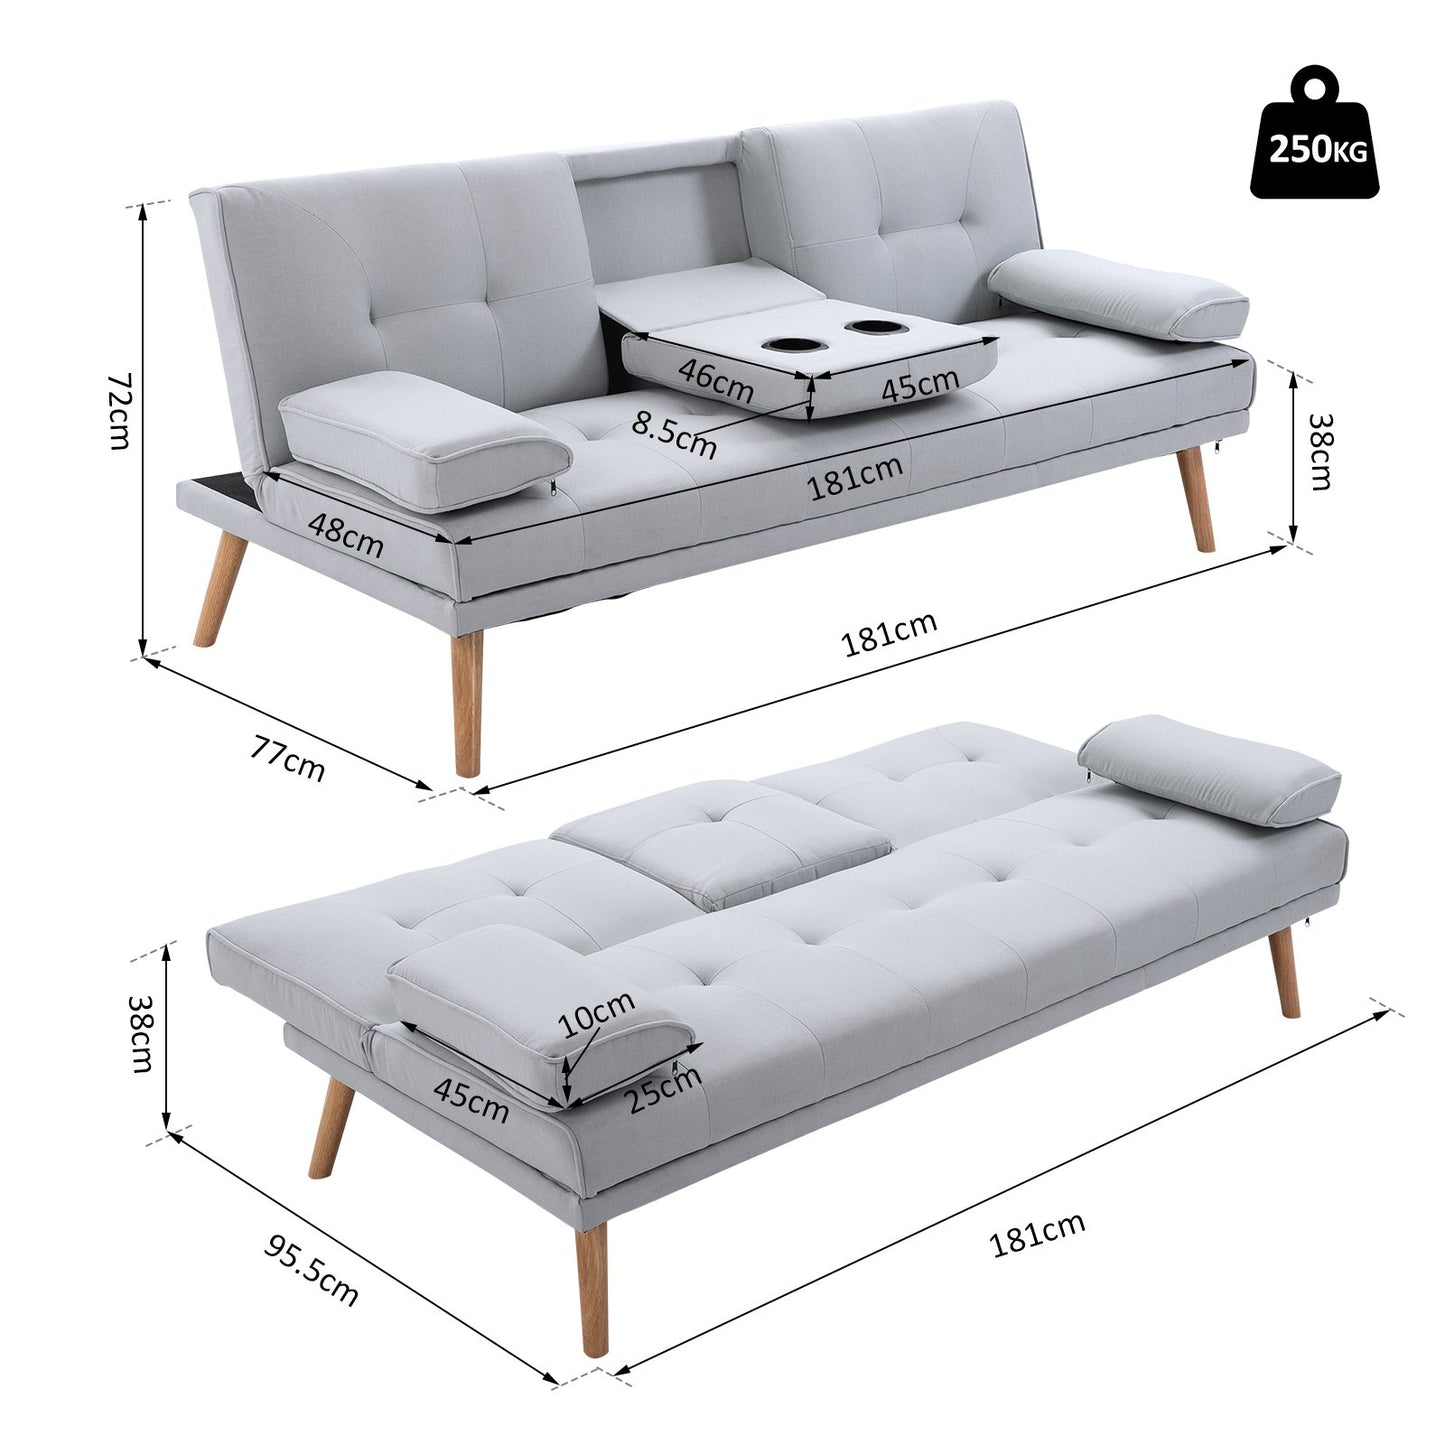 HOMCOM 3 Seater Sofa Bed W/Linen Metal Sponge Rubber Wood Legs, 181W x 77D x 72Hcm-Grey